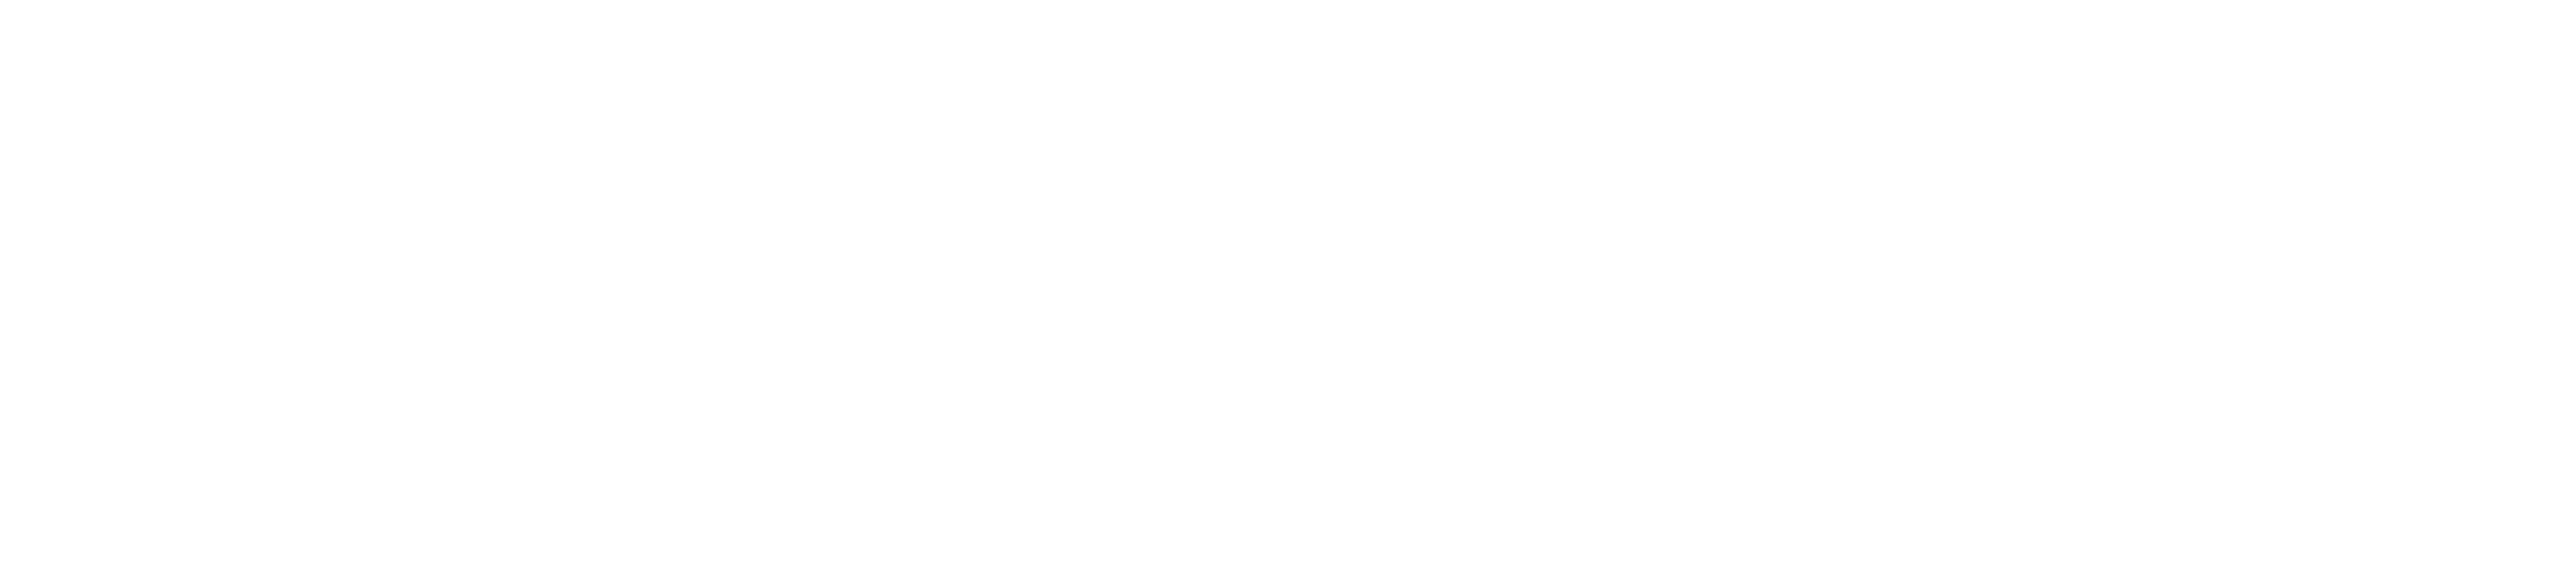 Dronpro logo